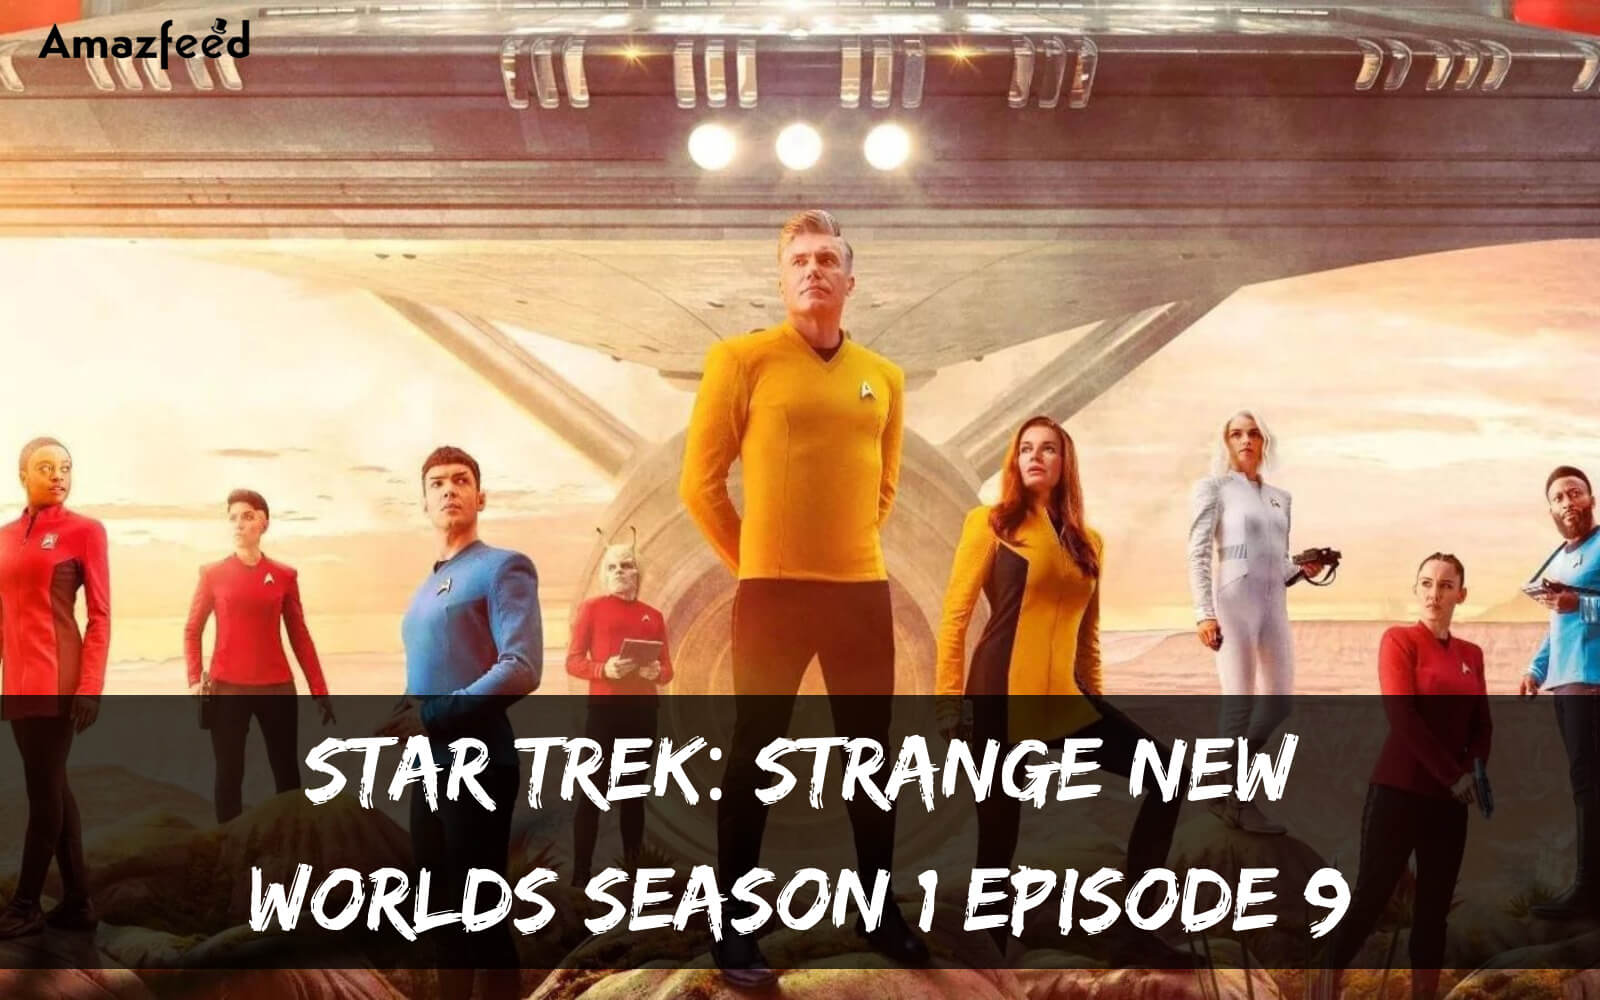 Star Trek Strange New Worlds Season 1 Episode 9 release date